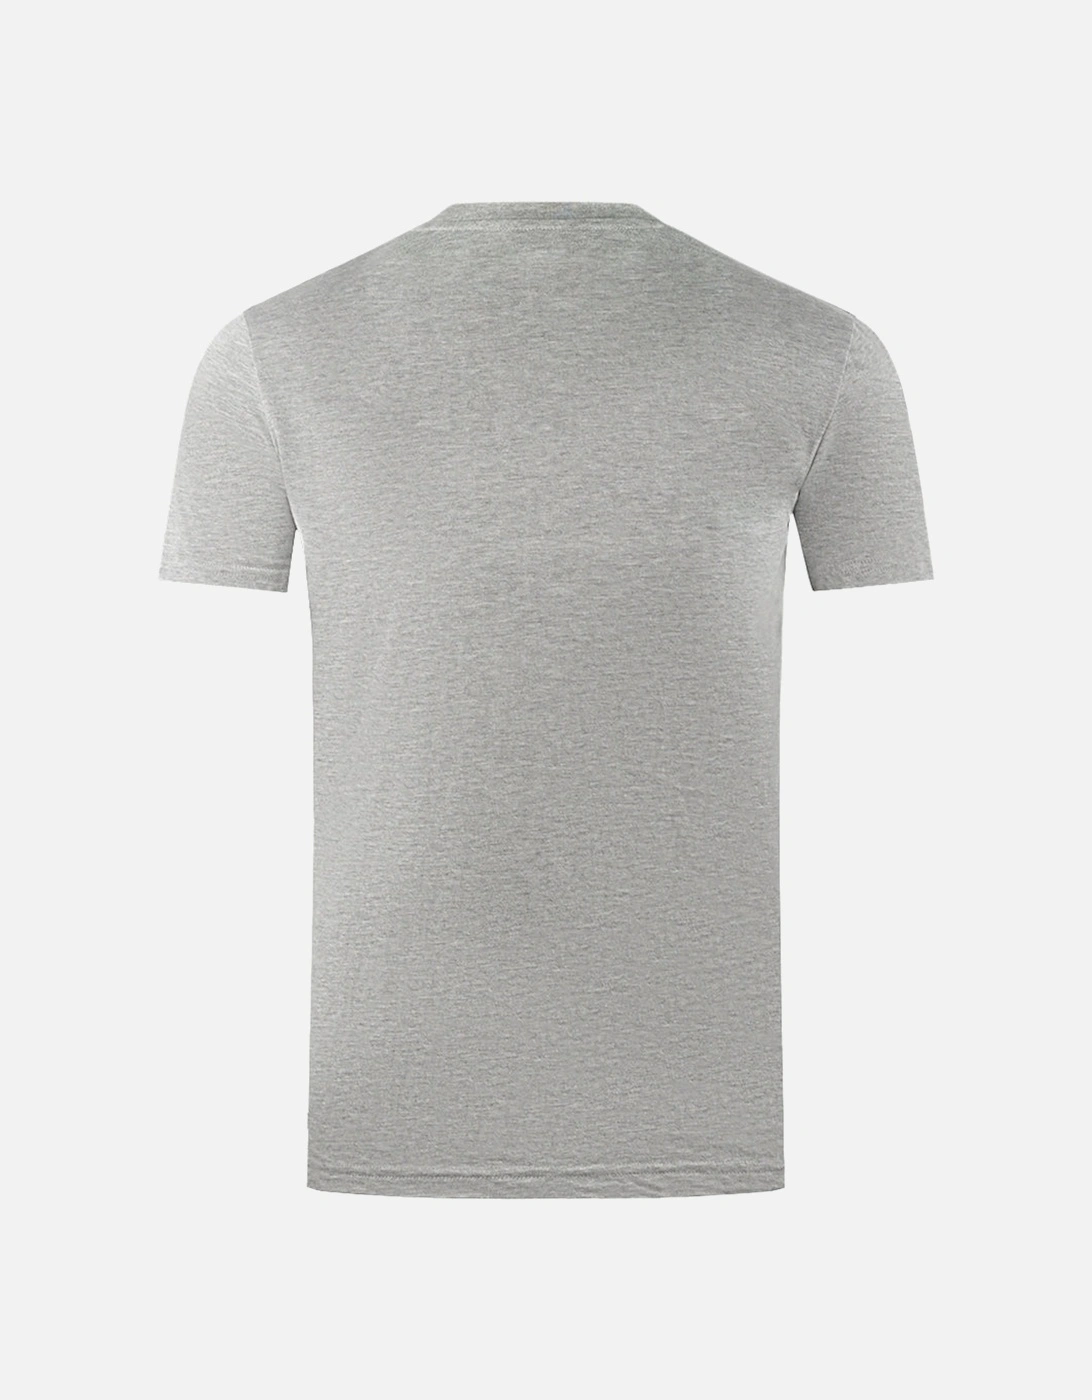 Large Bold London Aldis Brand Logo Grey T-Shirt